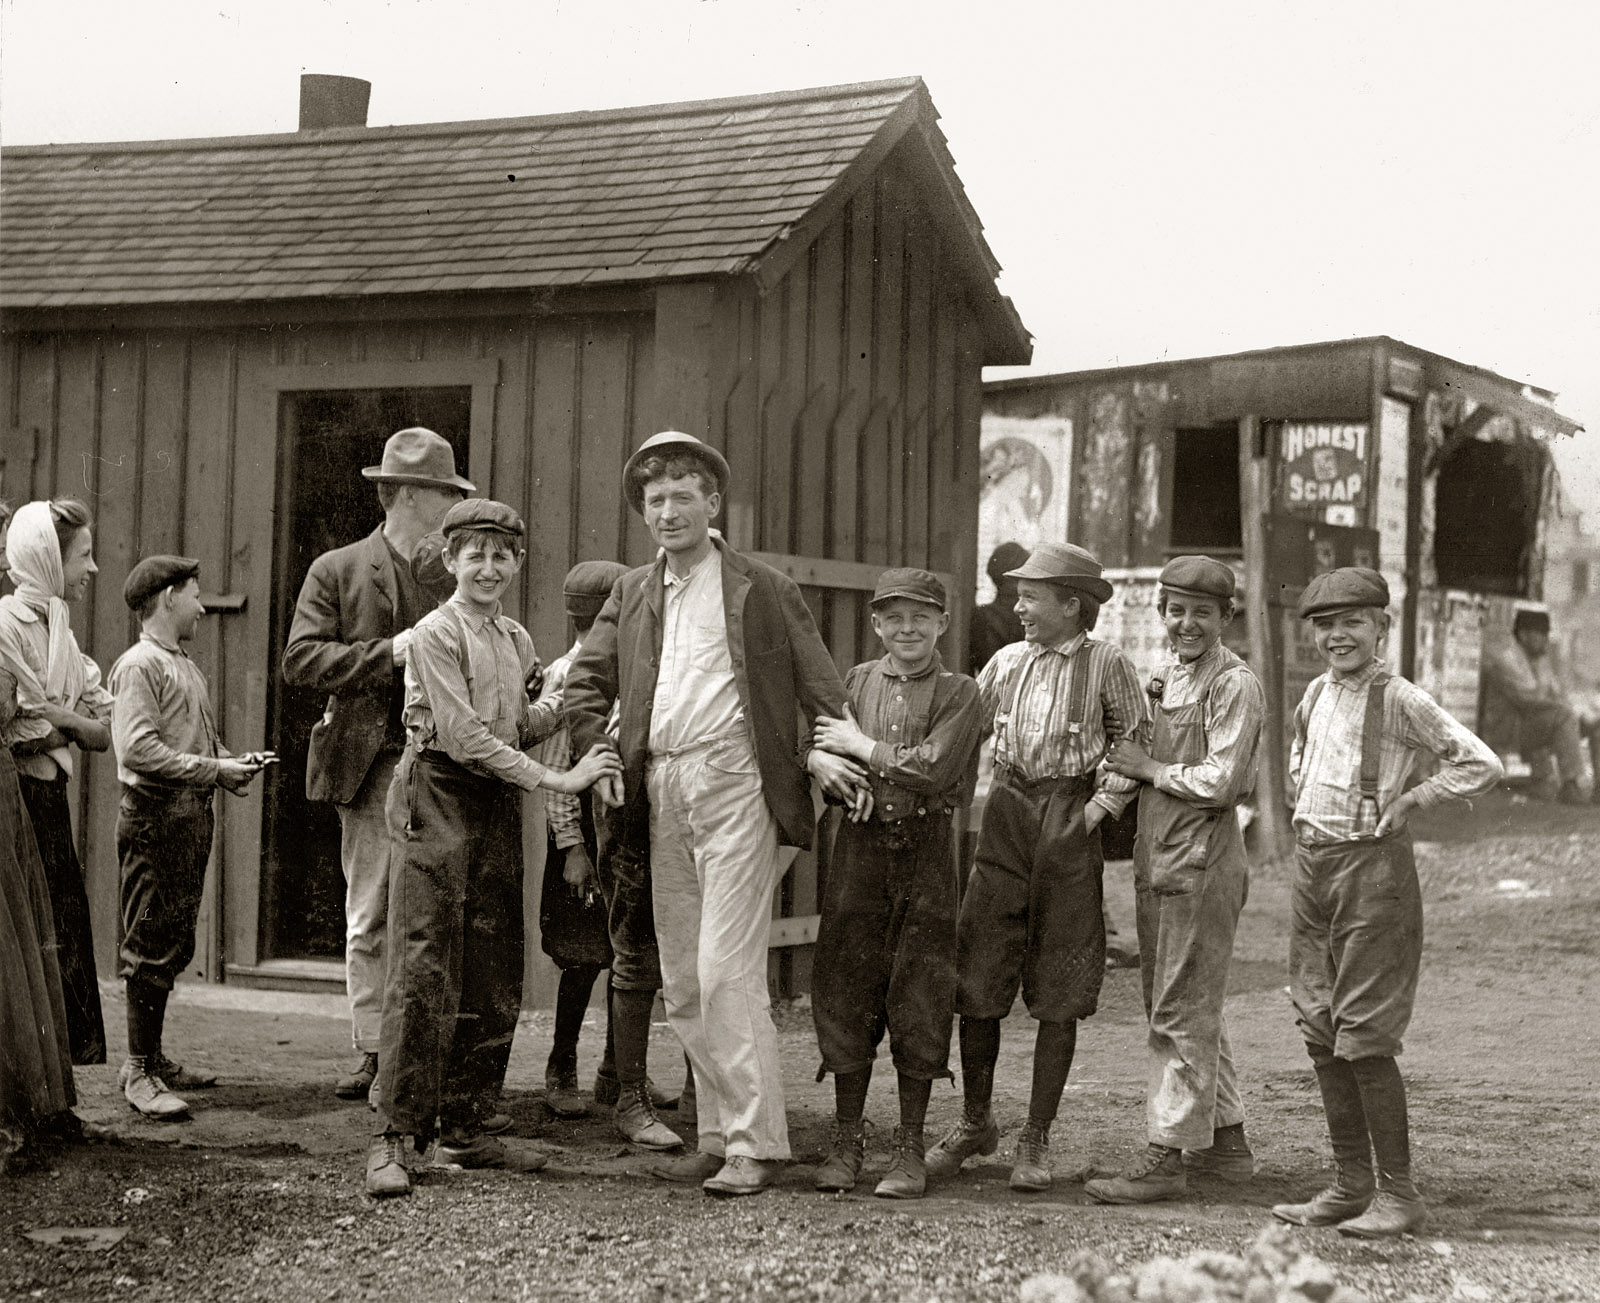 Shorpy Historic Picture Archive :: Honest Scrap: 1910 high-resolution photo